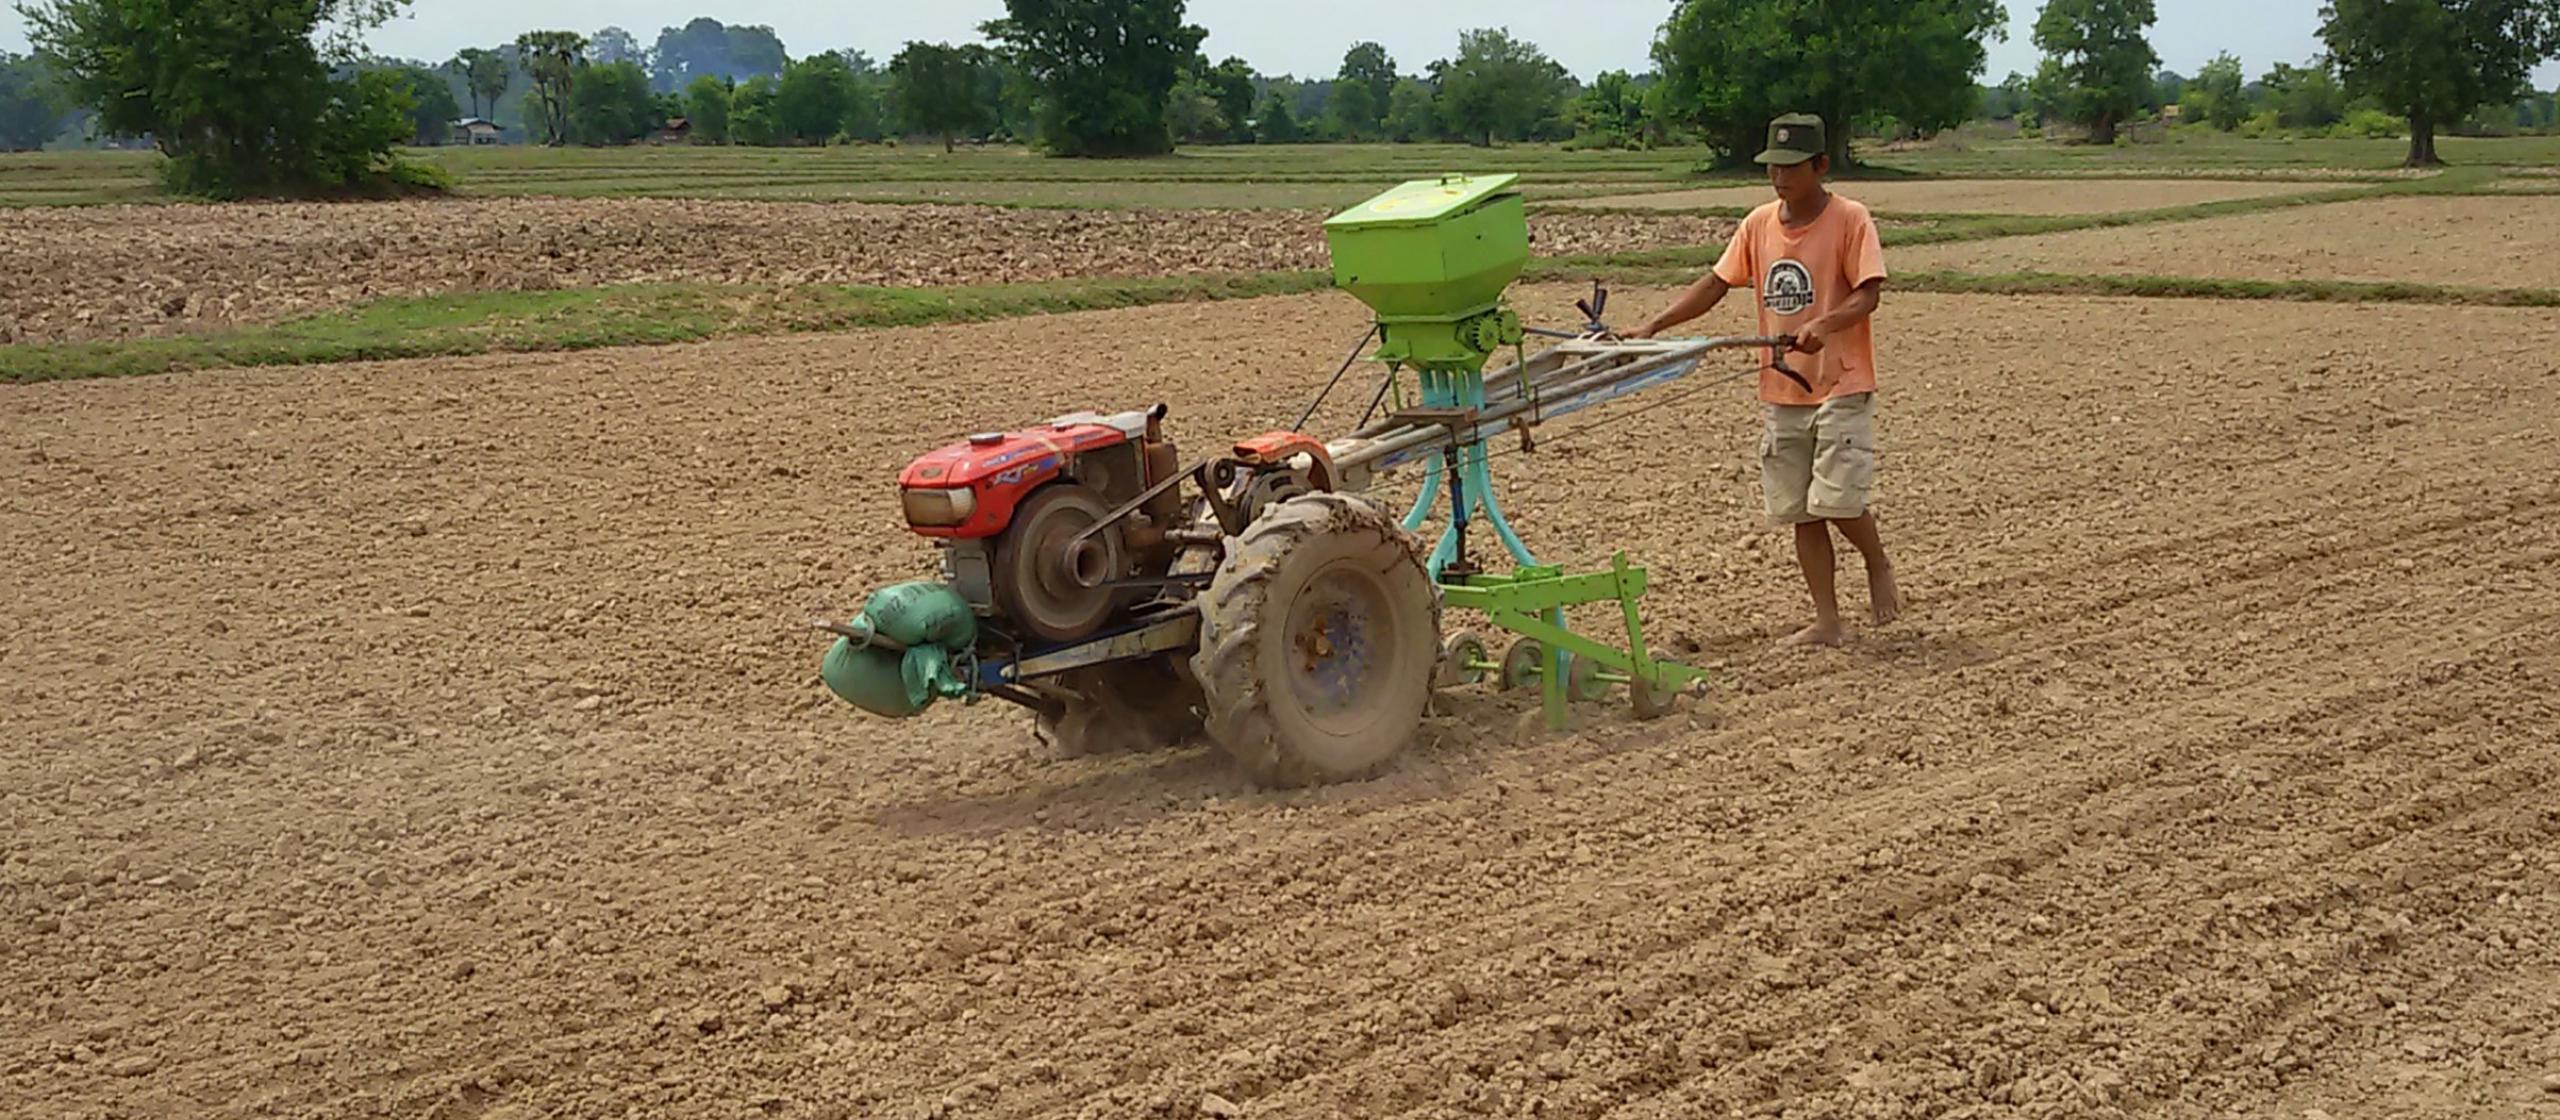 A man ploughs a rice field